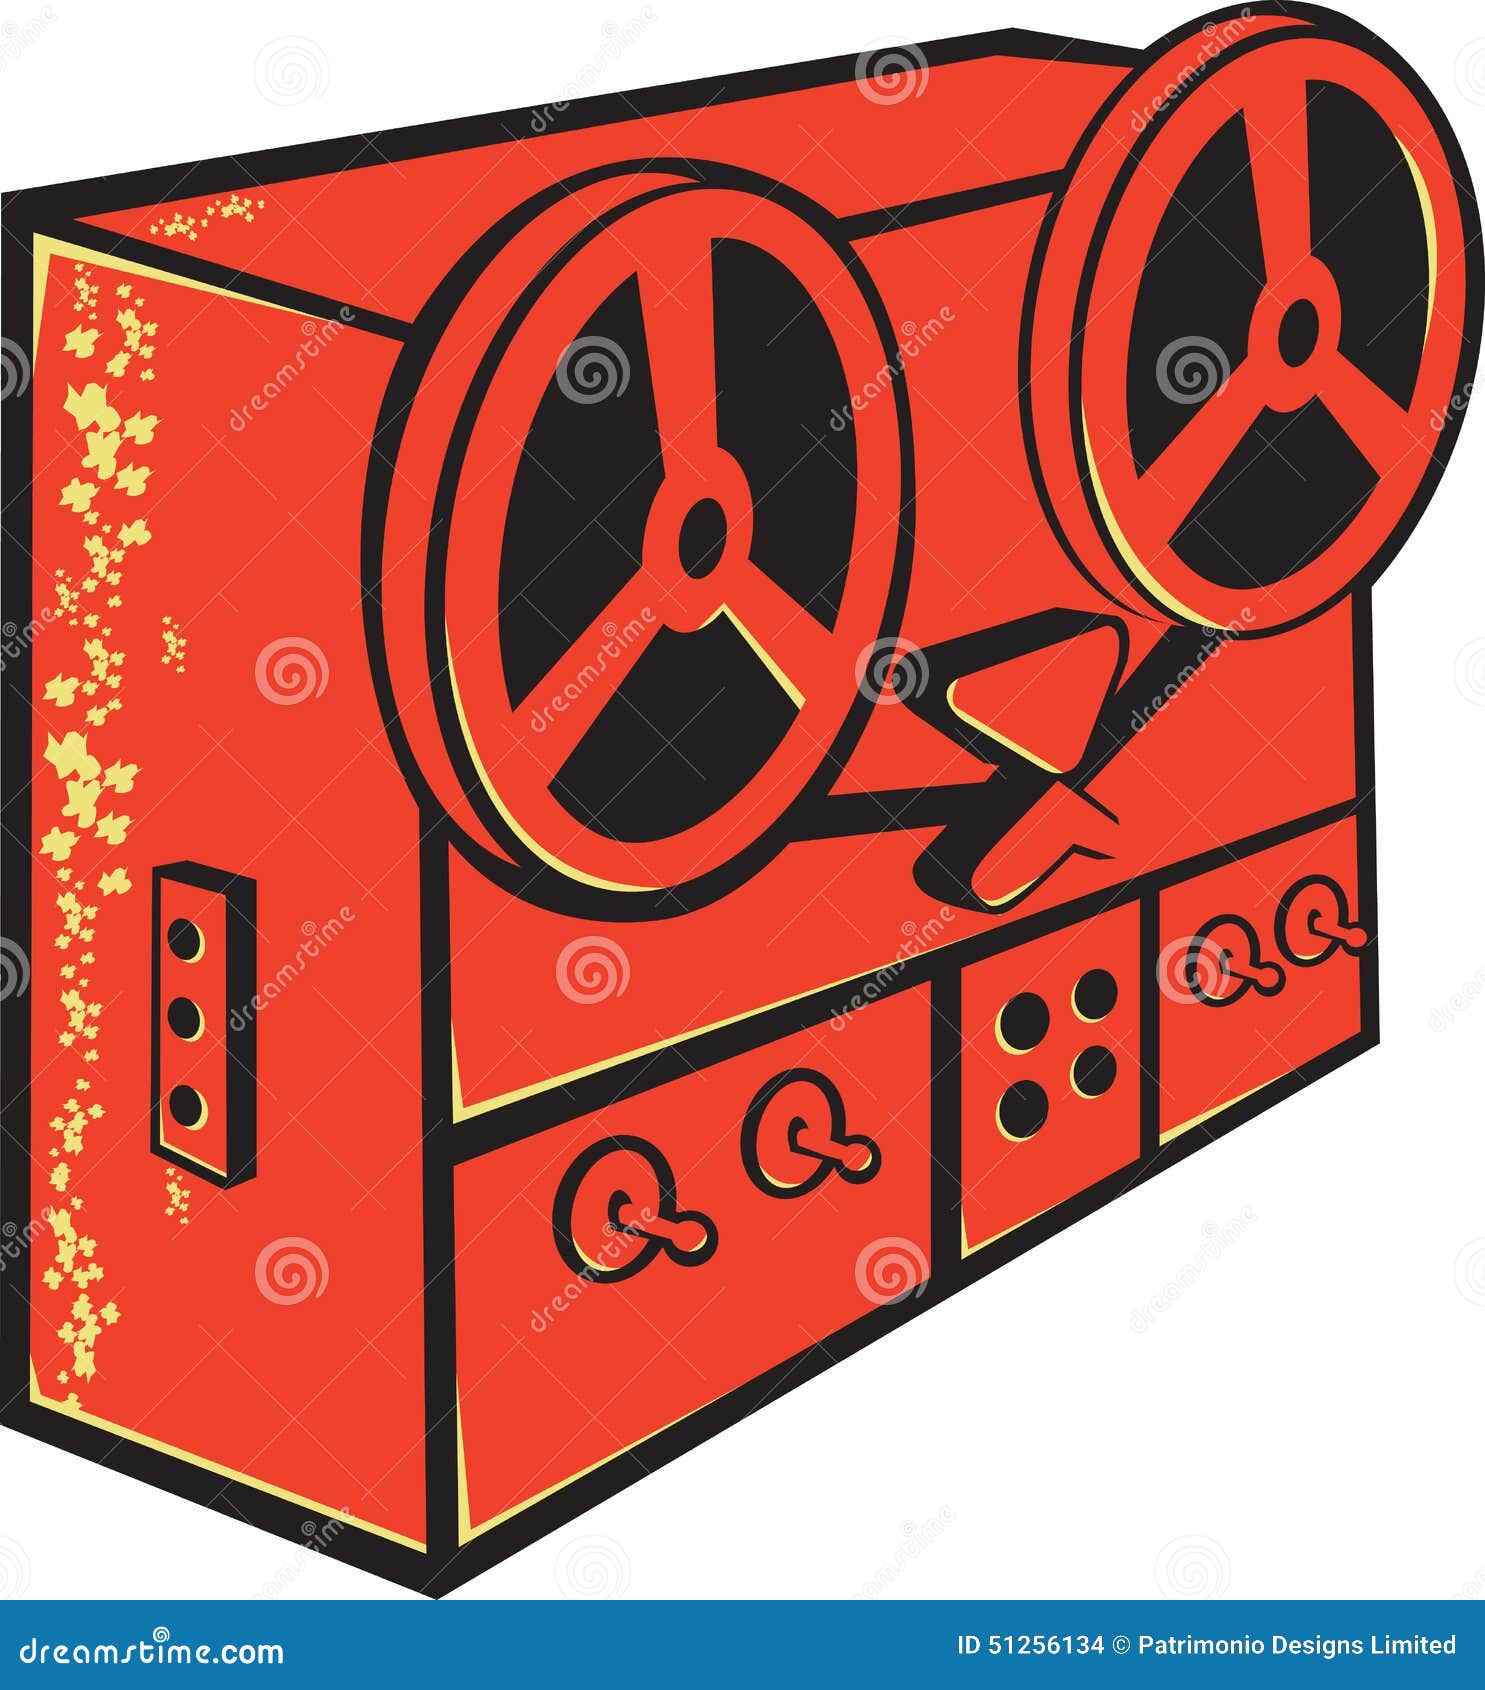 534 Reel Reel Tape Machine Stock Illustrations, Vectors & Clipart -  Dreamstime